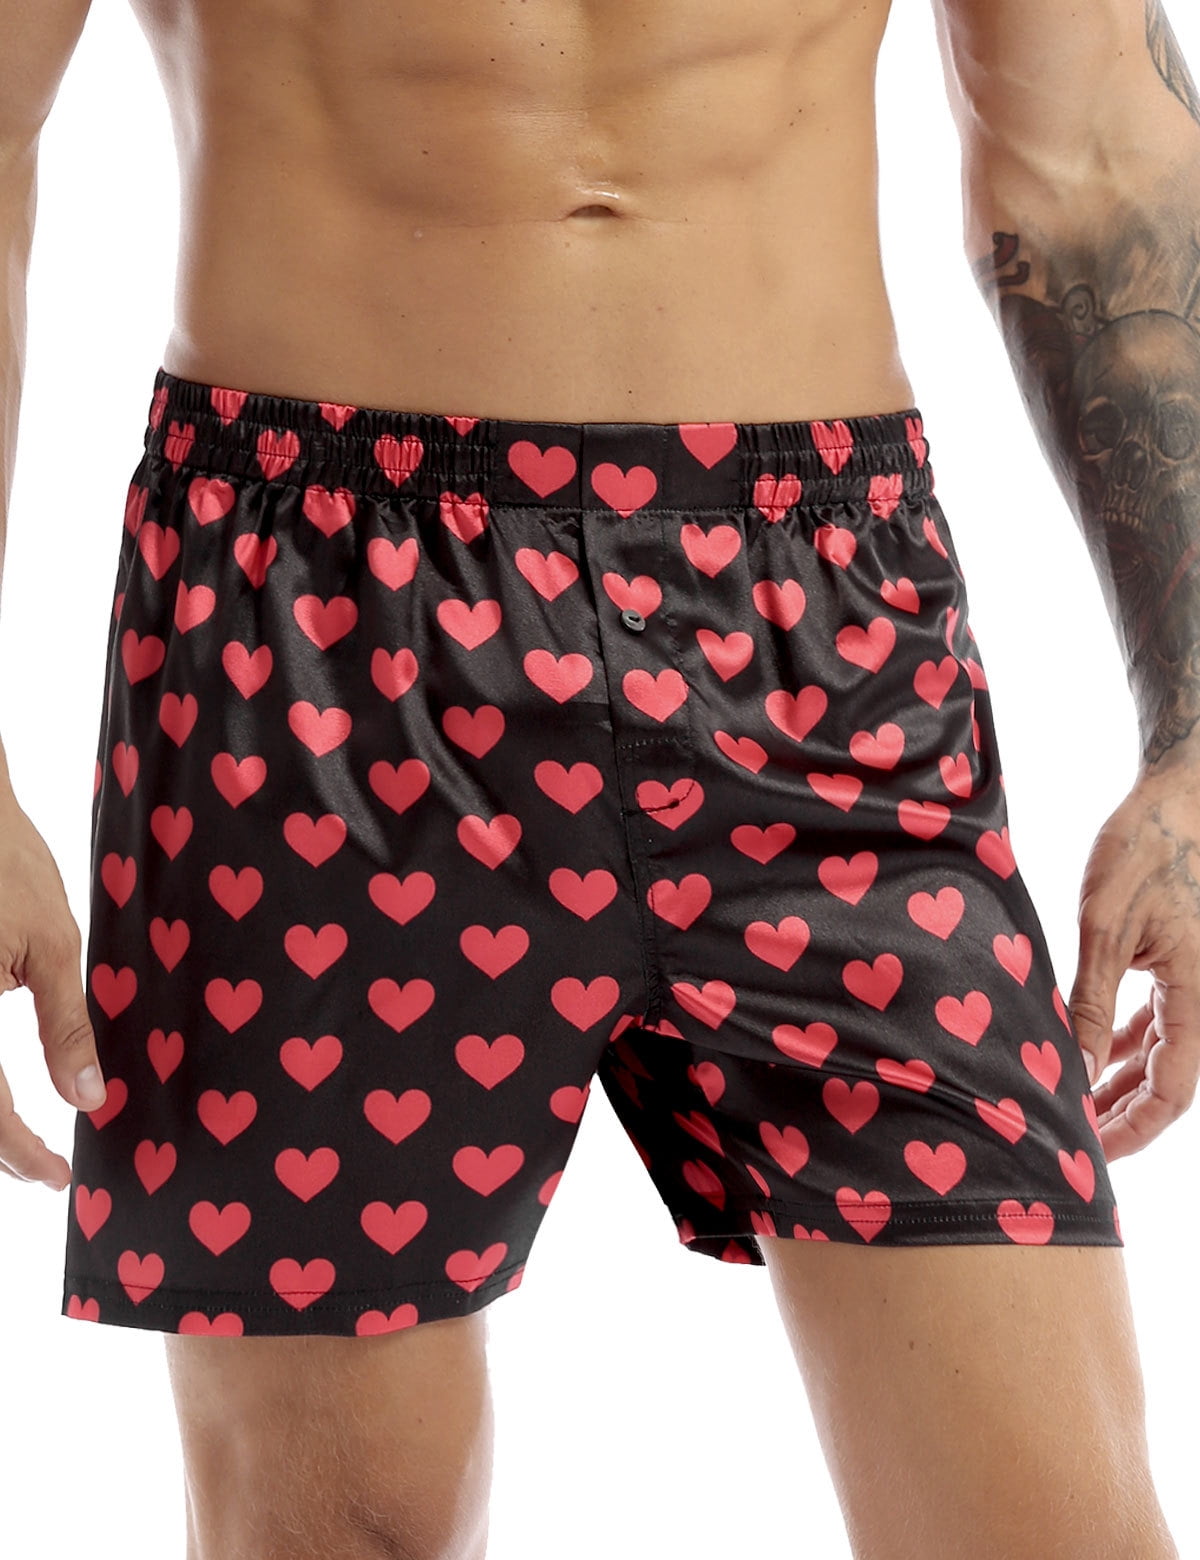 inhzoy Men's Love Heart Lip Print Silk Satin Boxers Shorts Lounge